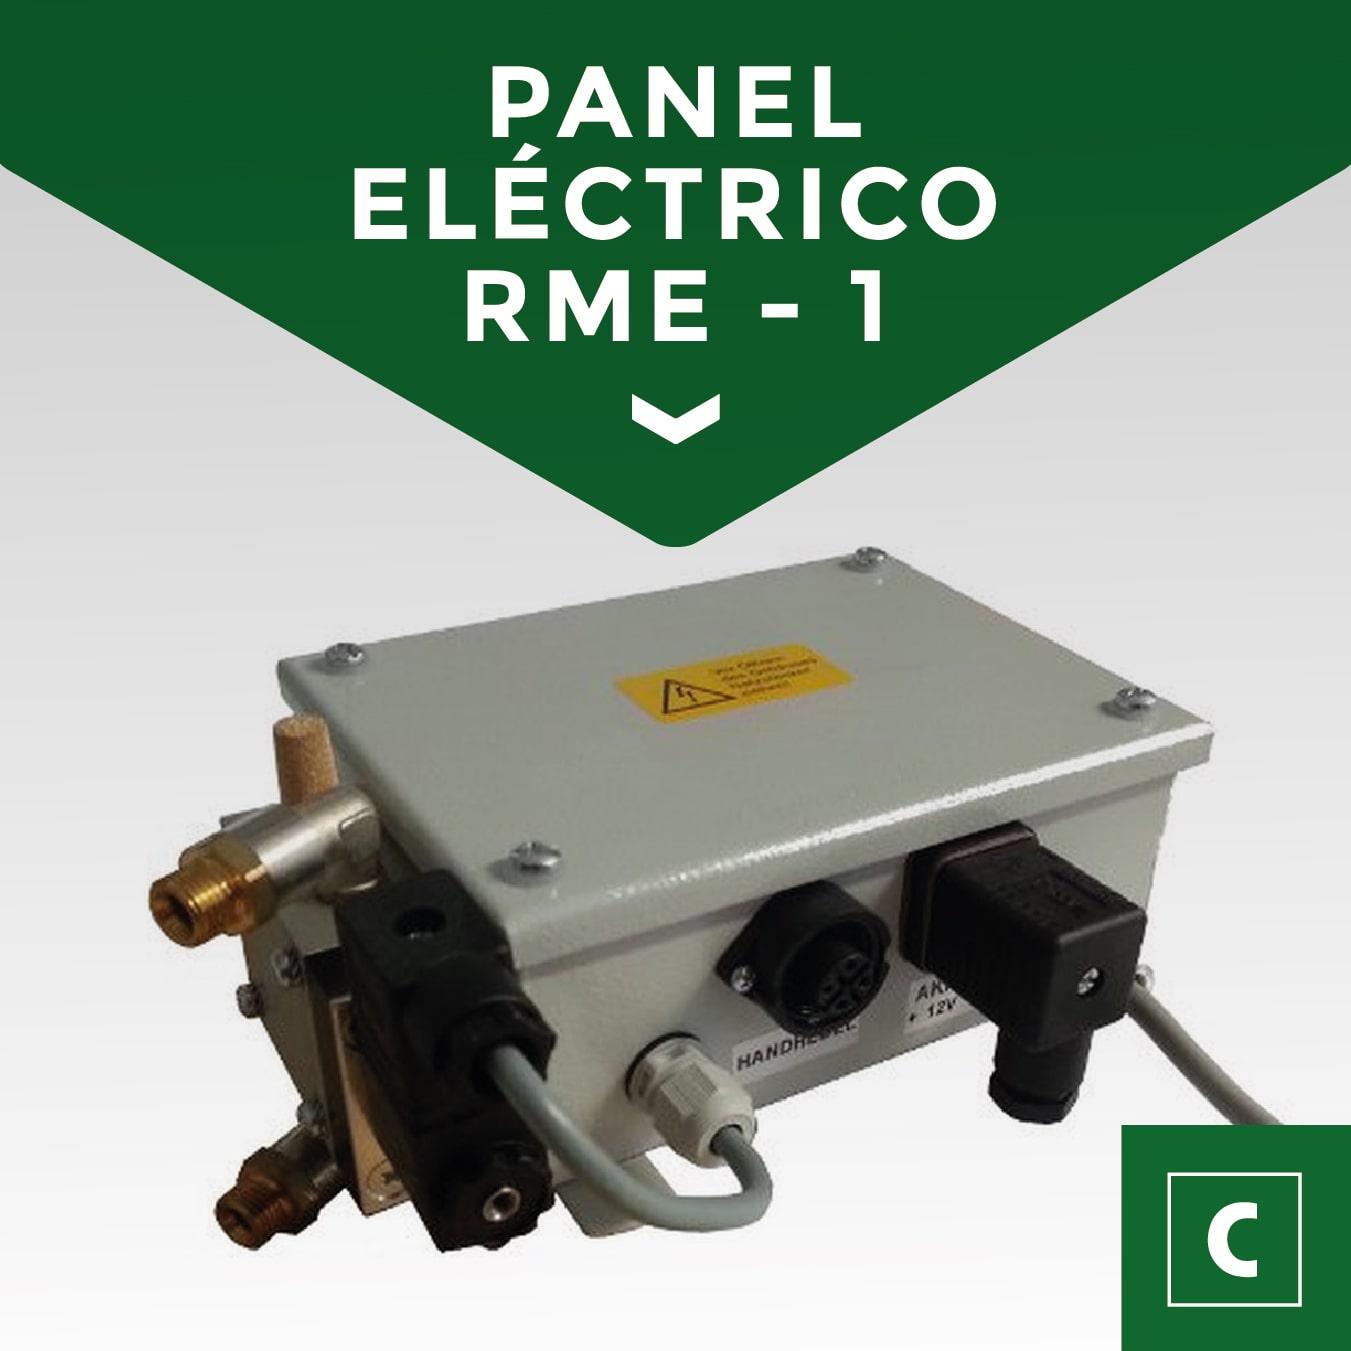 Panel eléctrico RME - 1